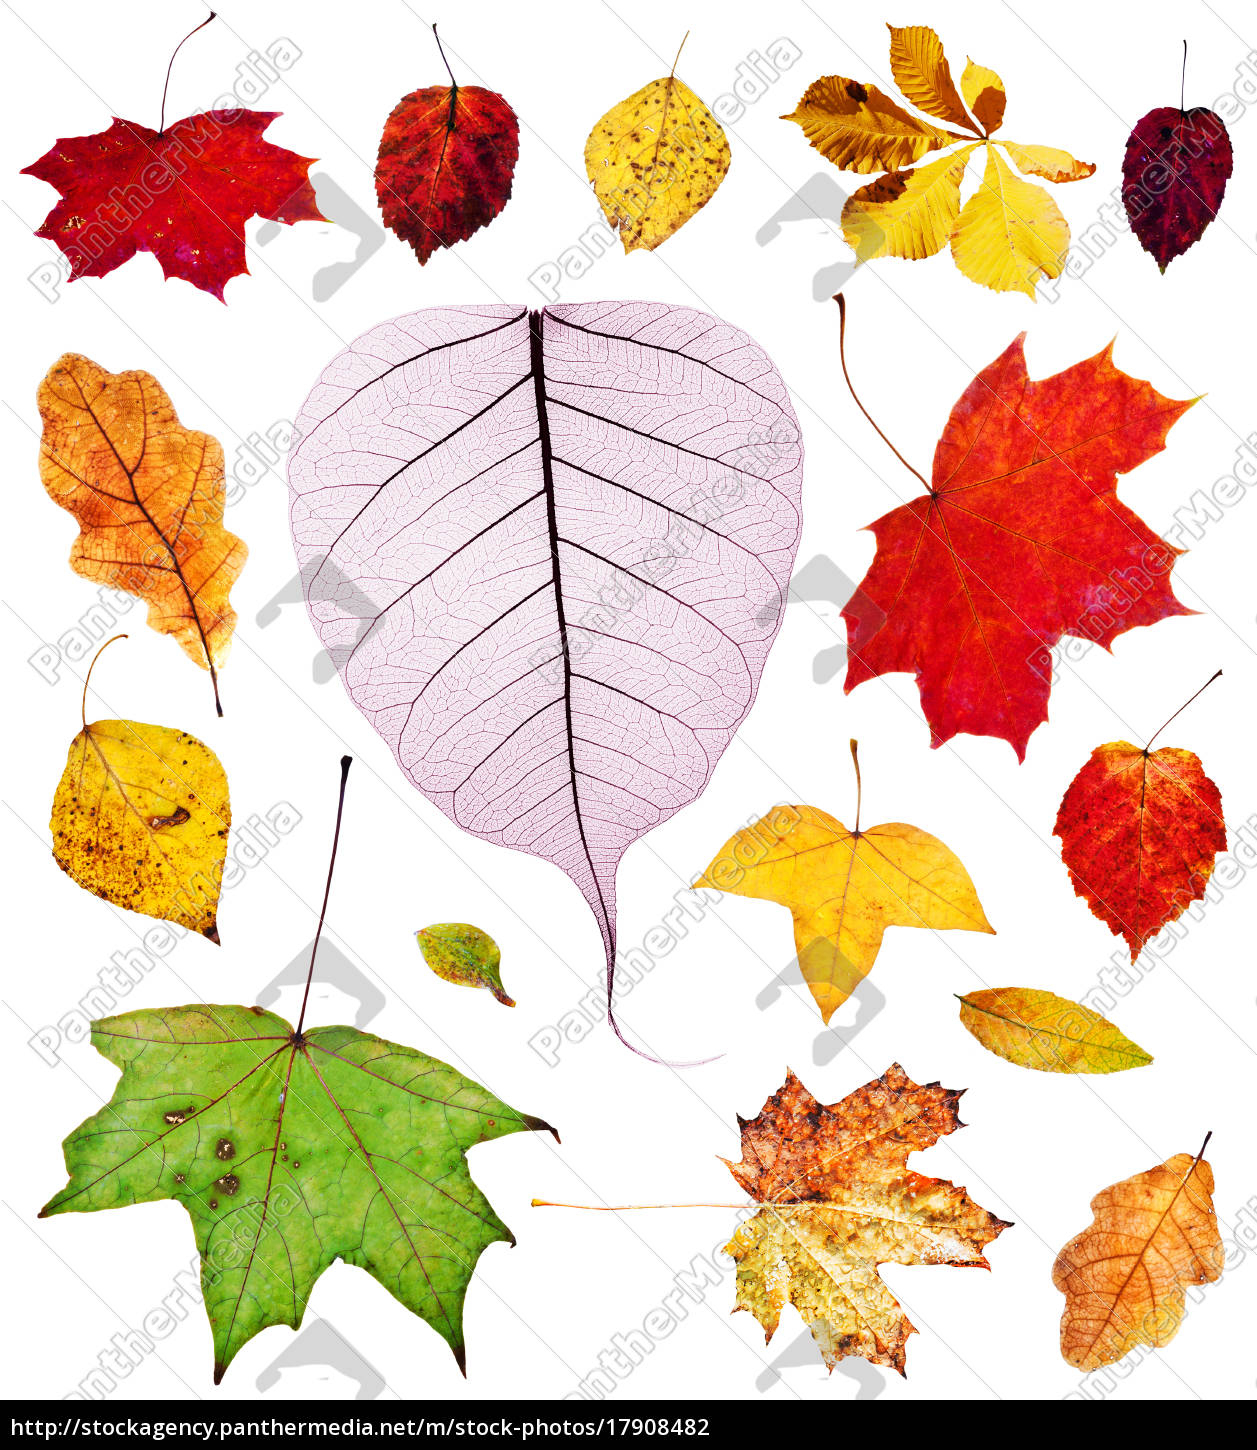 Stockfoto 17908482 - Set Aus Bunten Blätter Im Herbst Isoliert bei Warum Werden Blätter Im Herbst Bunt